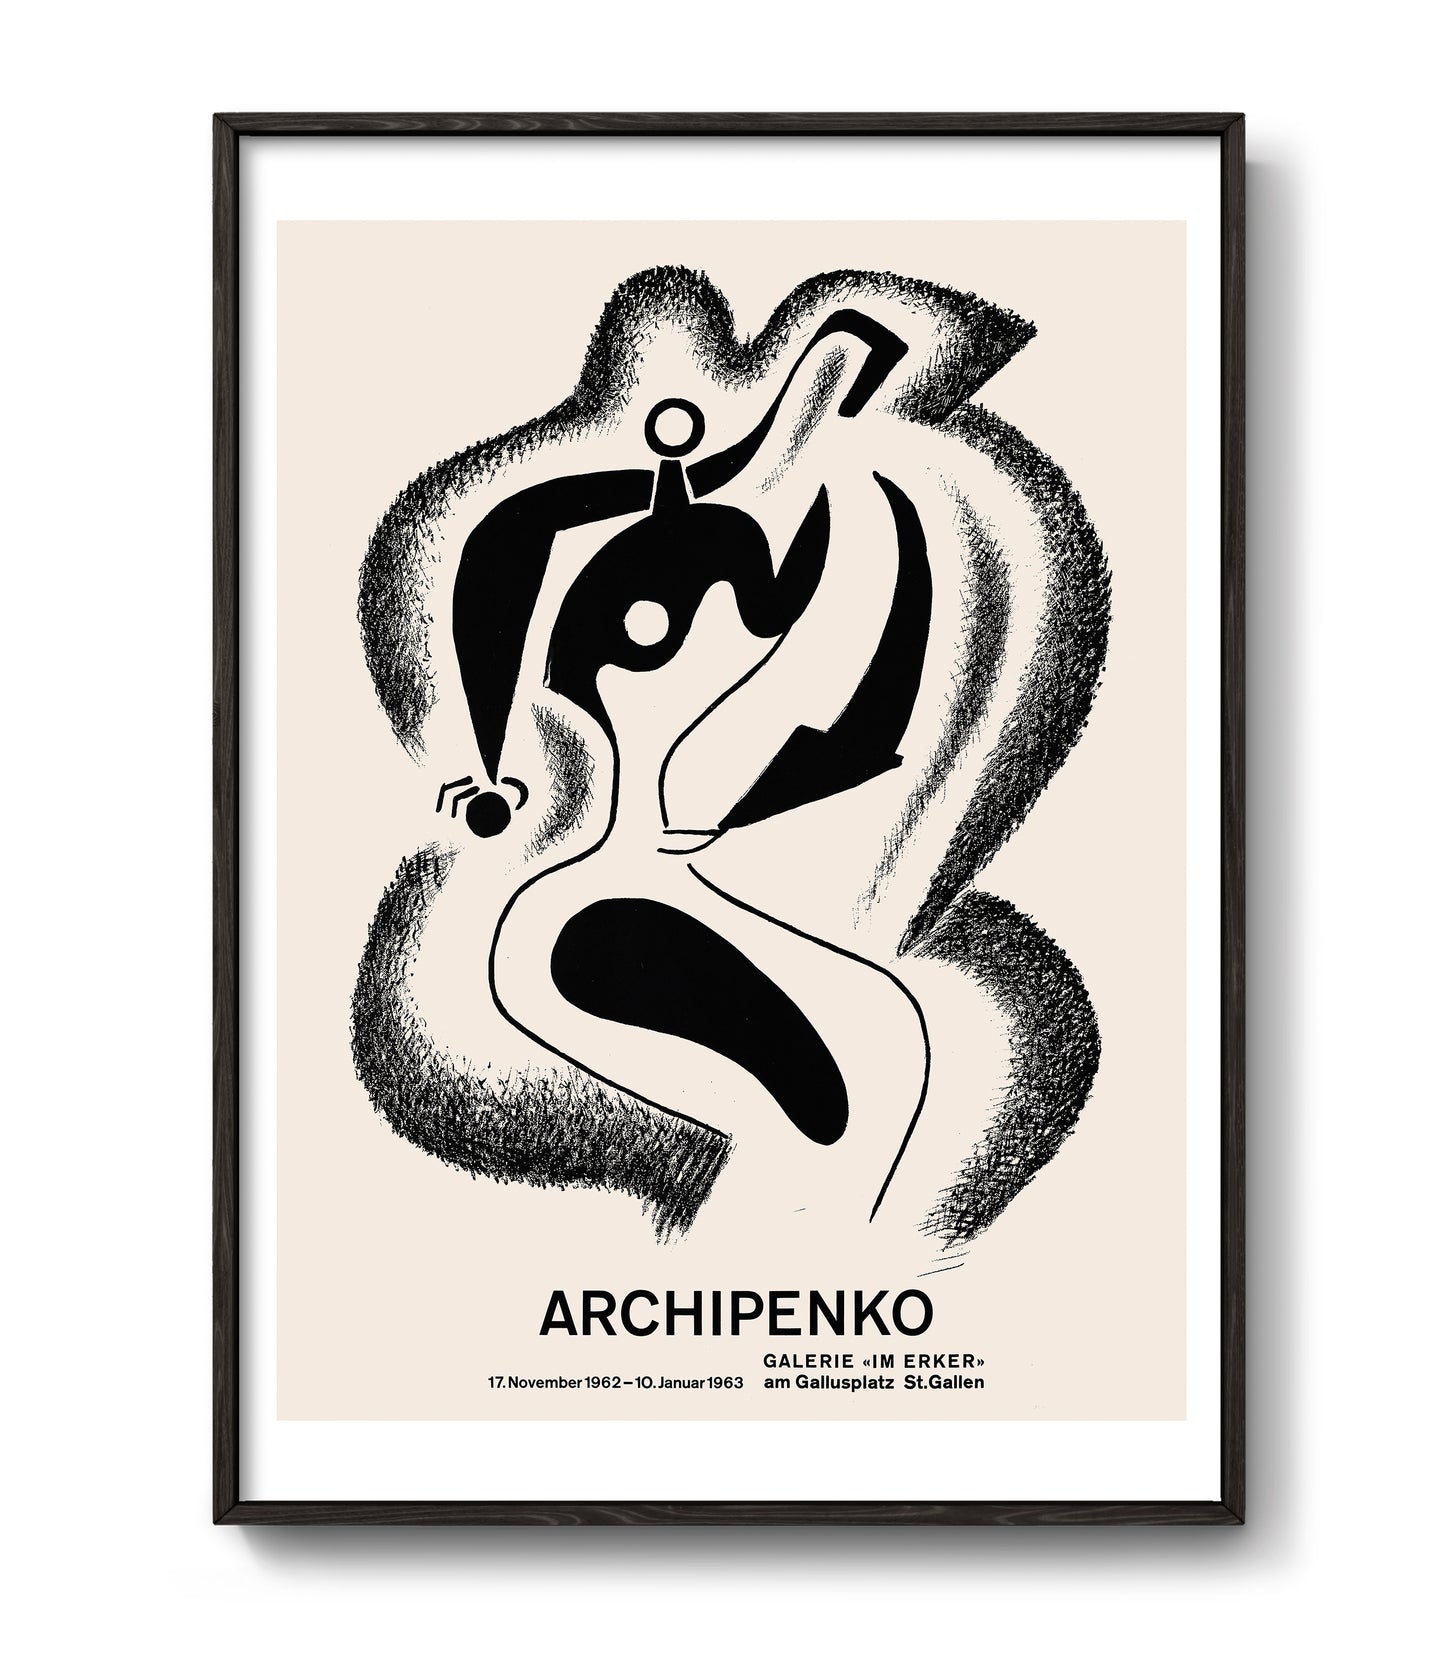 Archipenko exhibition poster